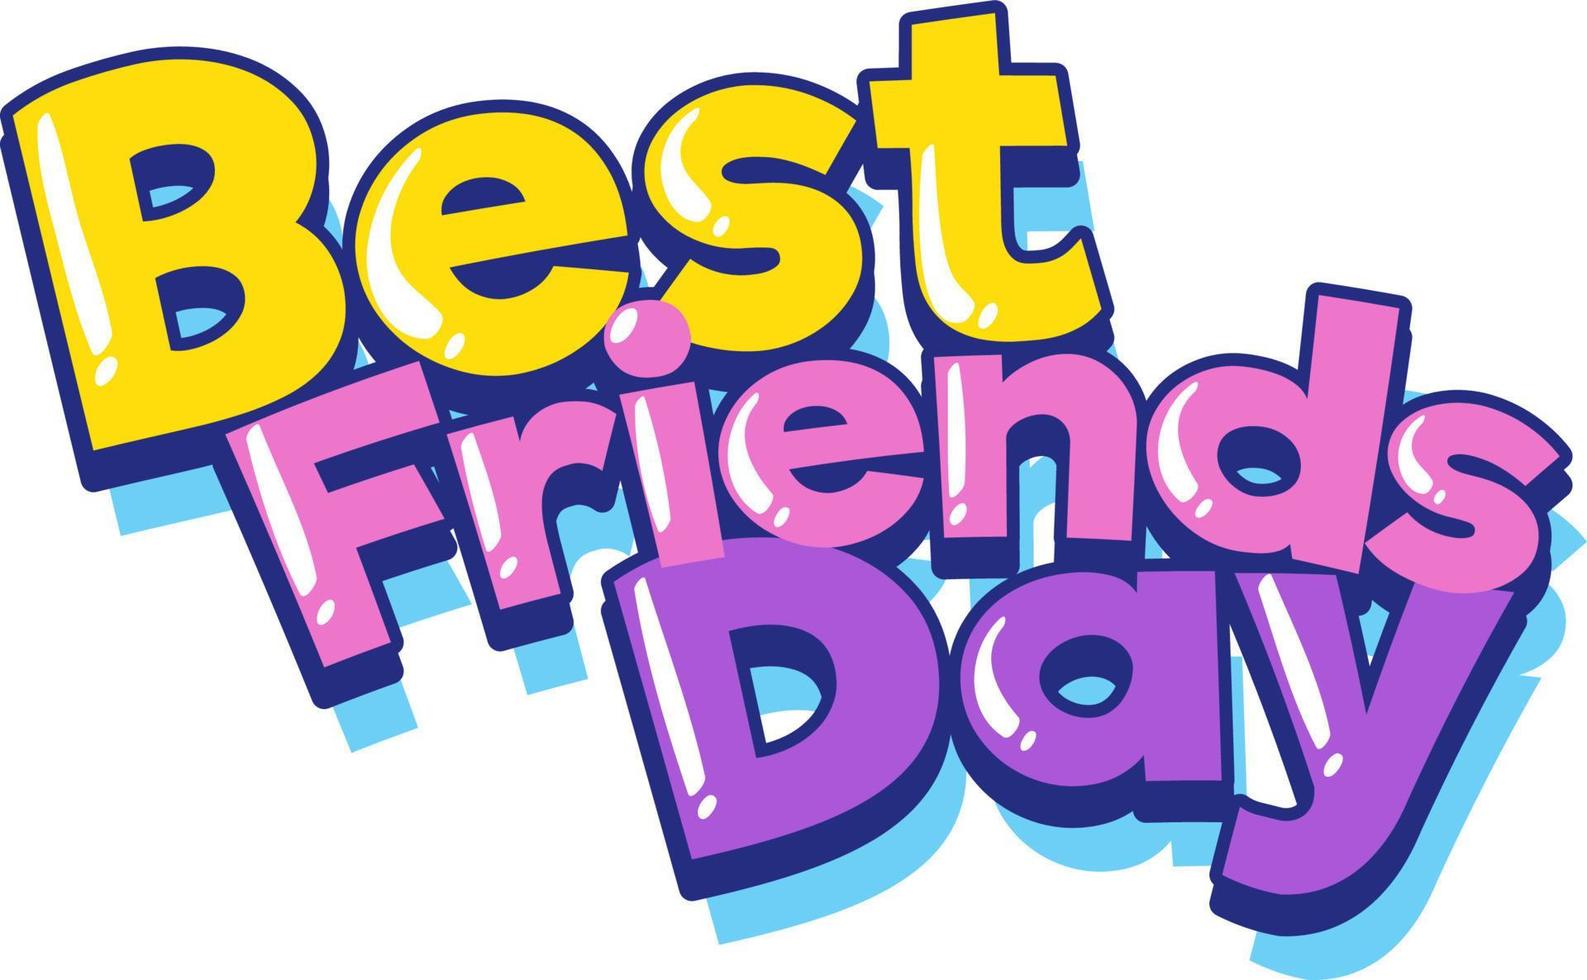 Best Friends Day logo banner vector